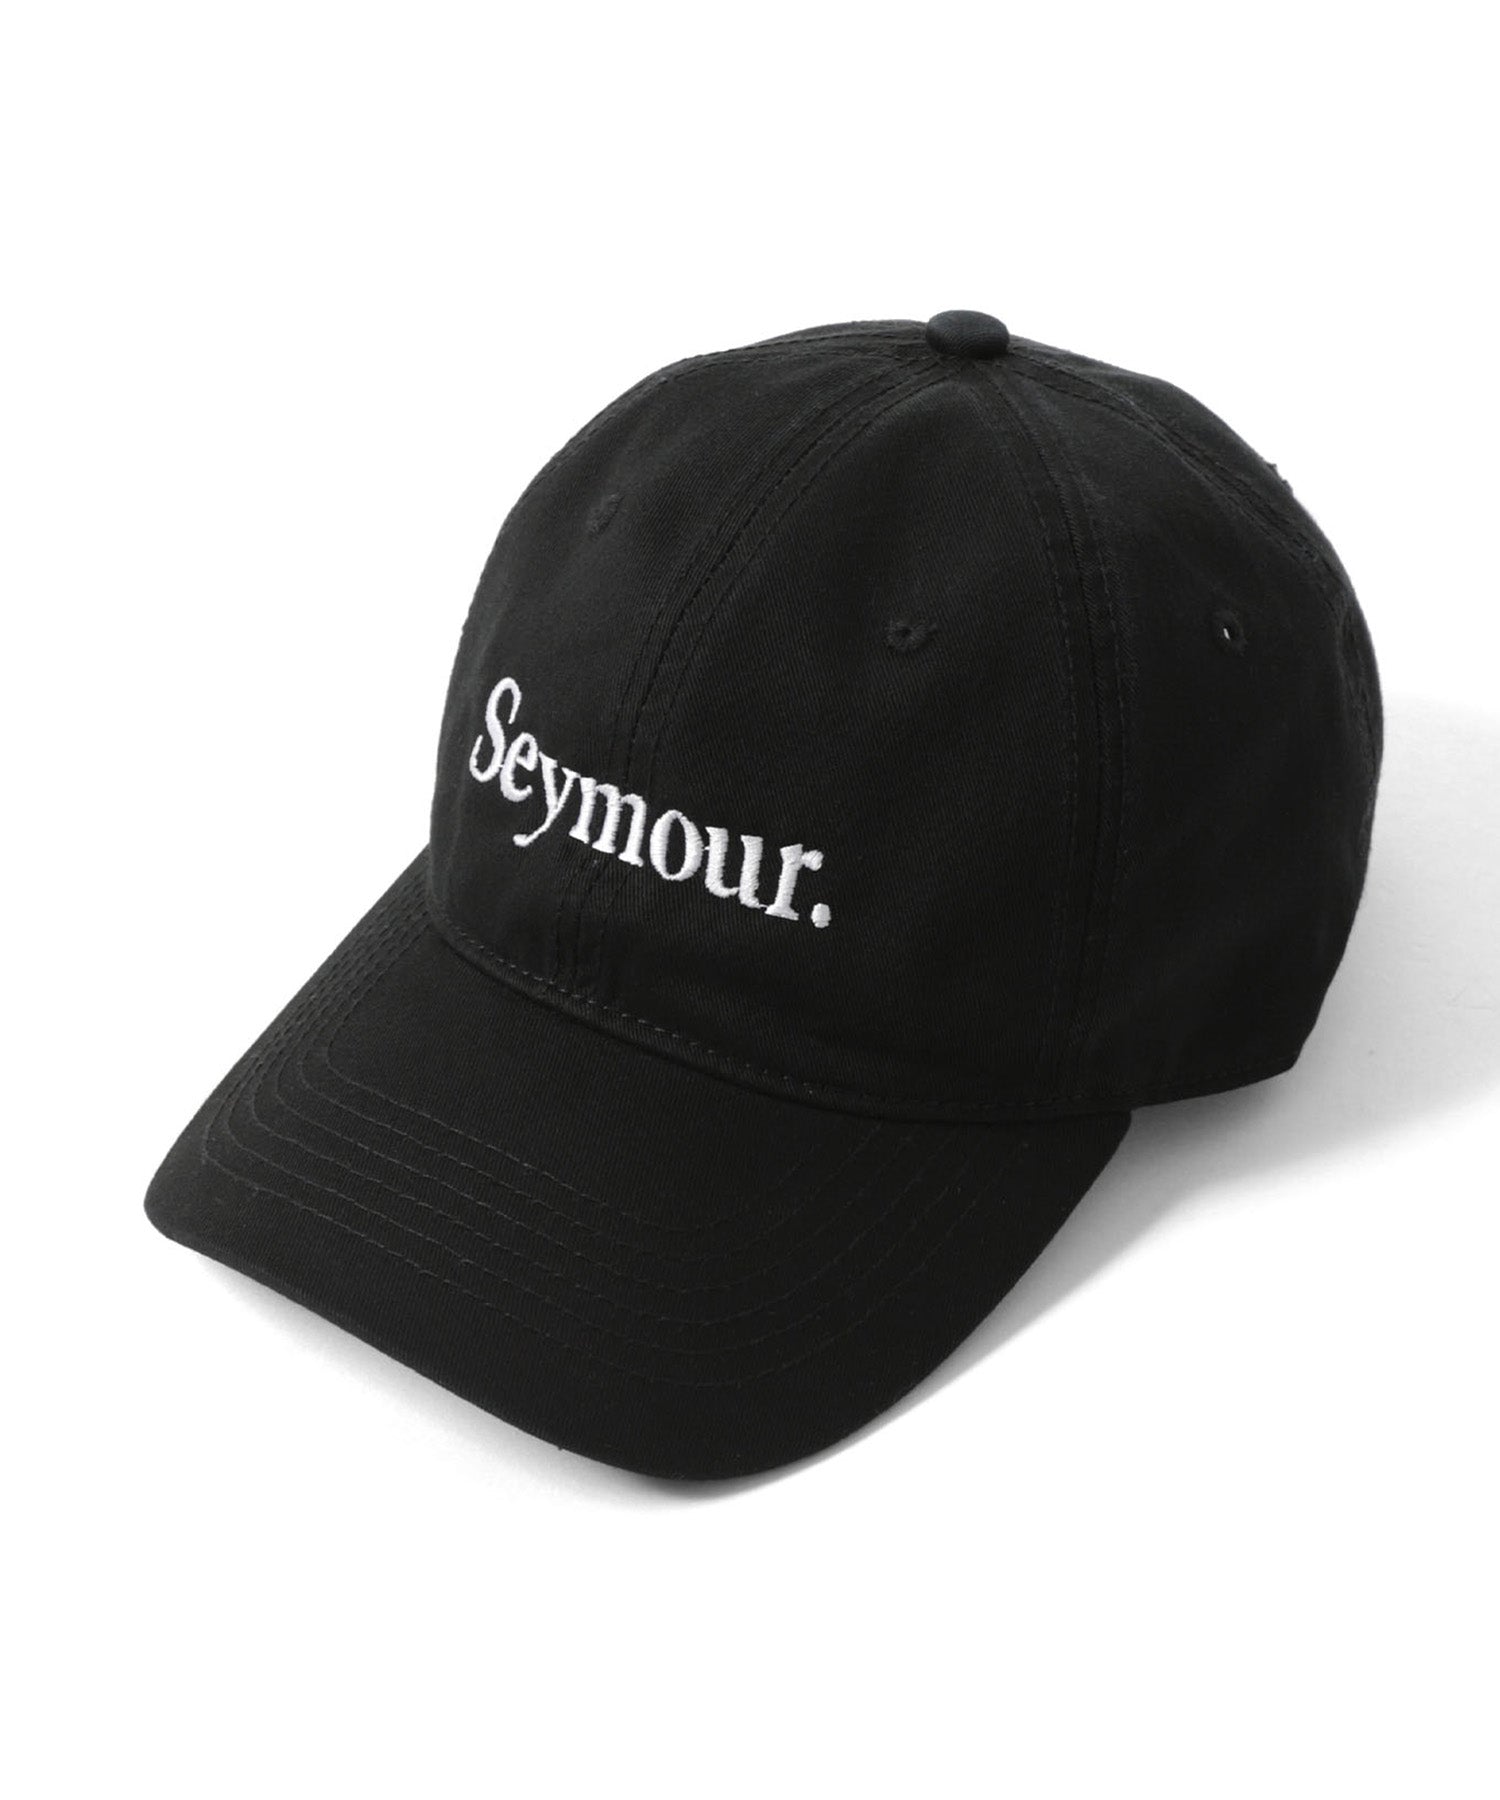 Seymour. "LOGO" EMBROIDERY CAP